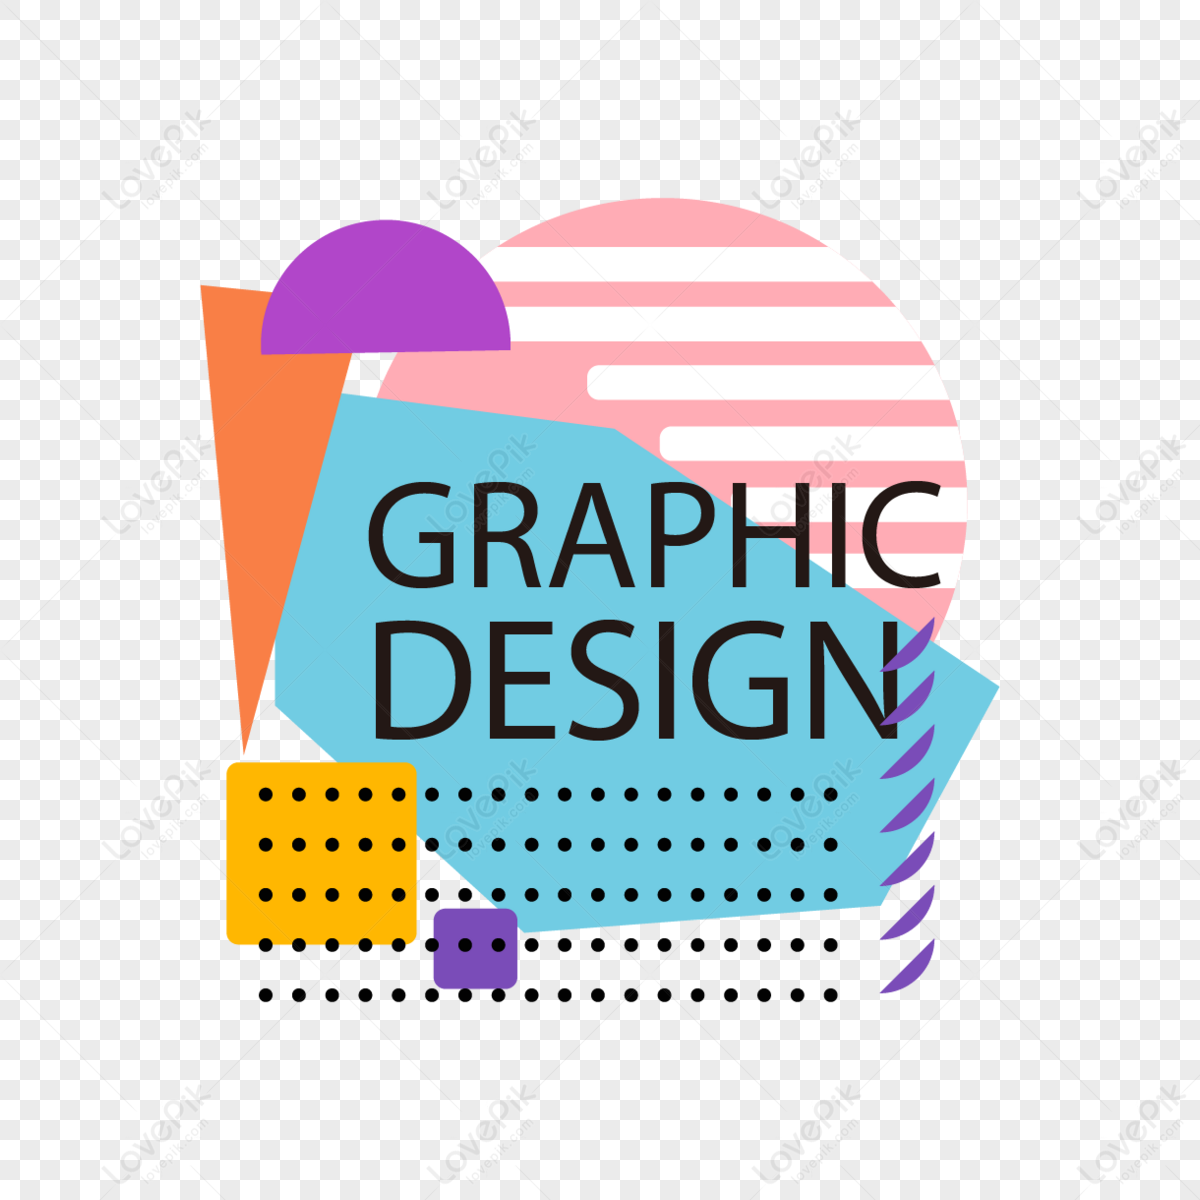 Colorful geometric logo design Royalty Free Vector Image